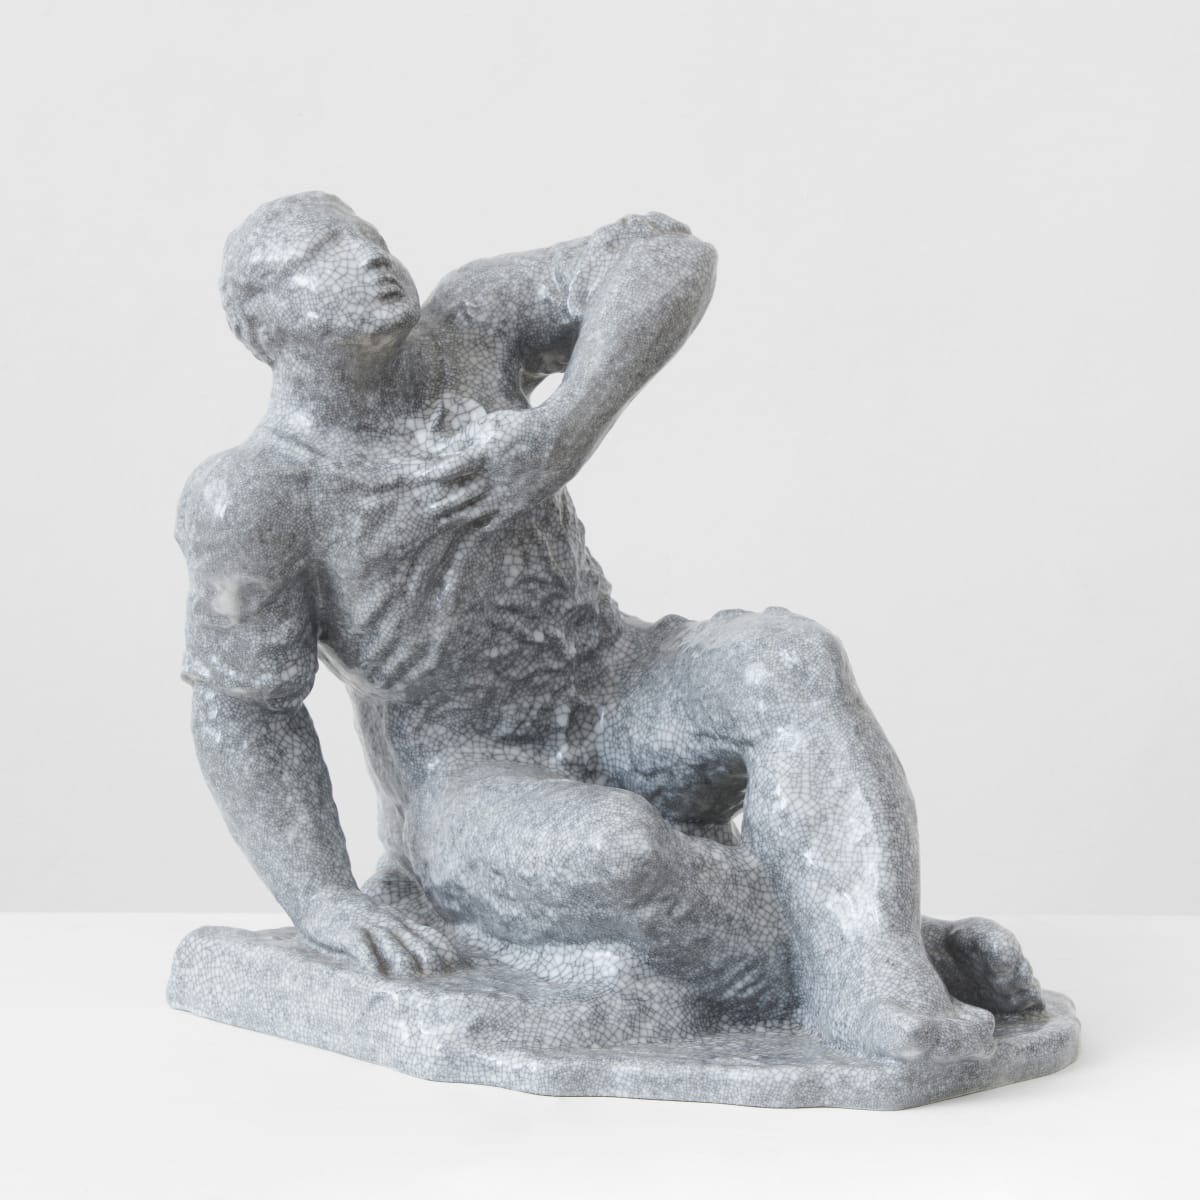 Sandro Chia, Sitzender Mann [Sitting Man], 1987